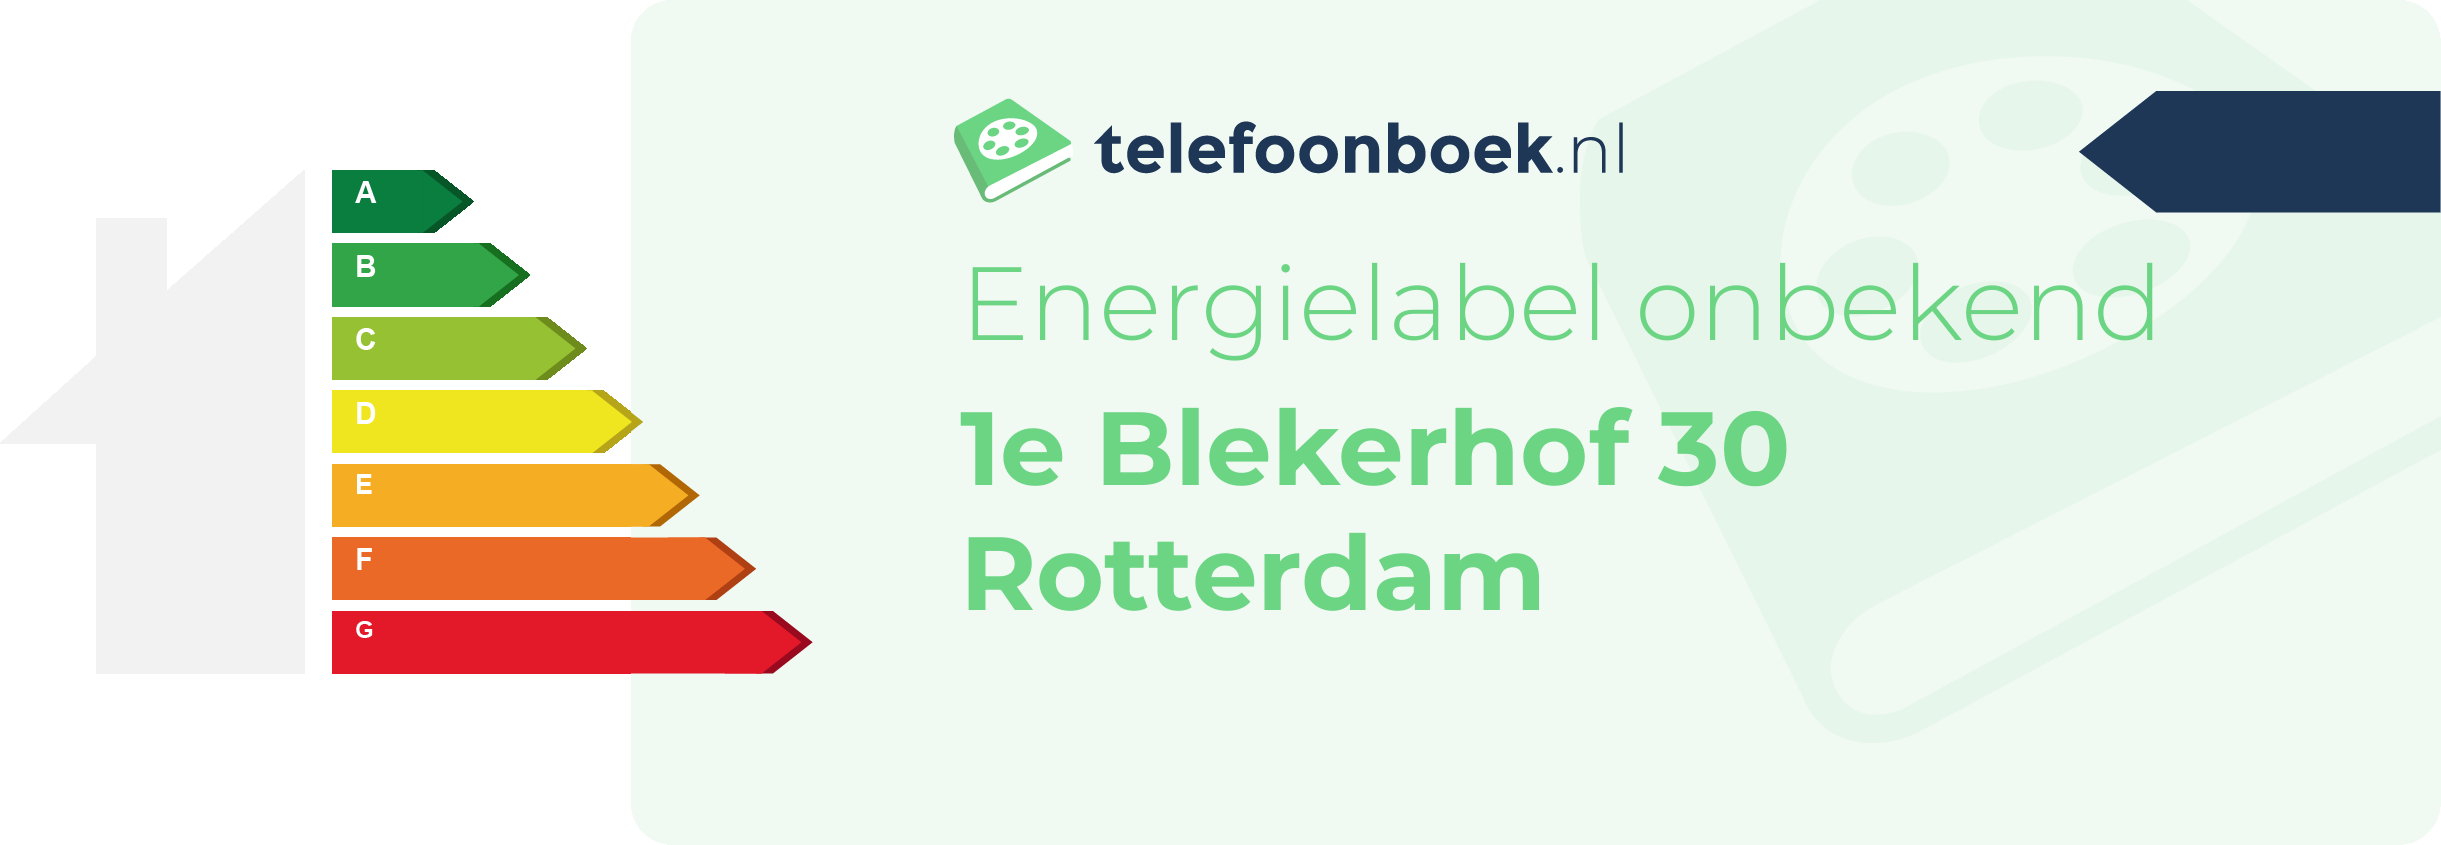 Energielabel 1e Blekerhof 30 Rotterdam